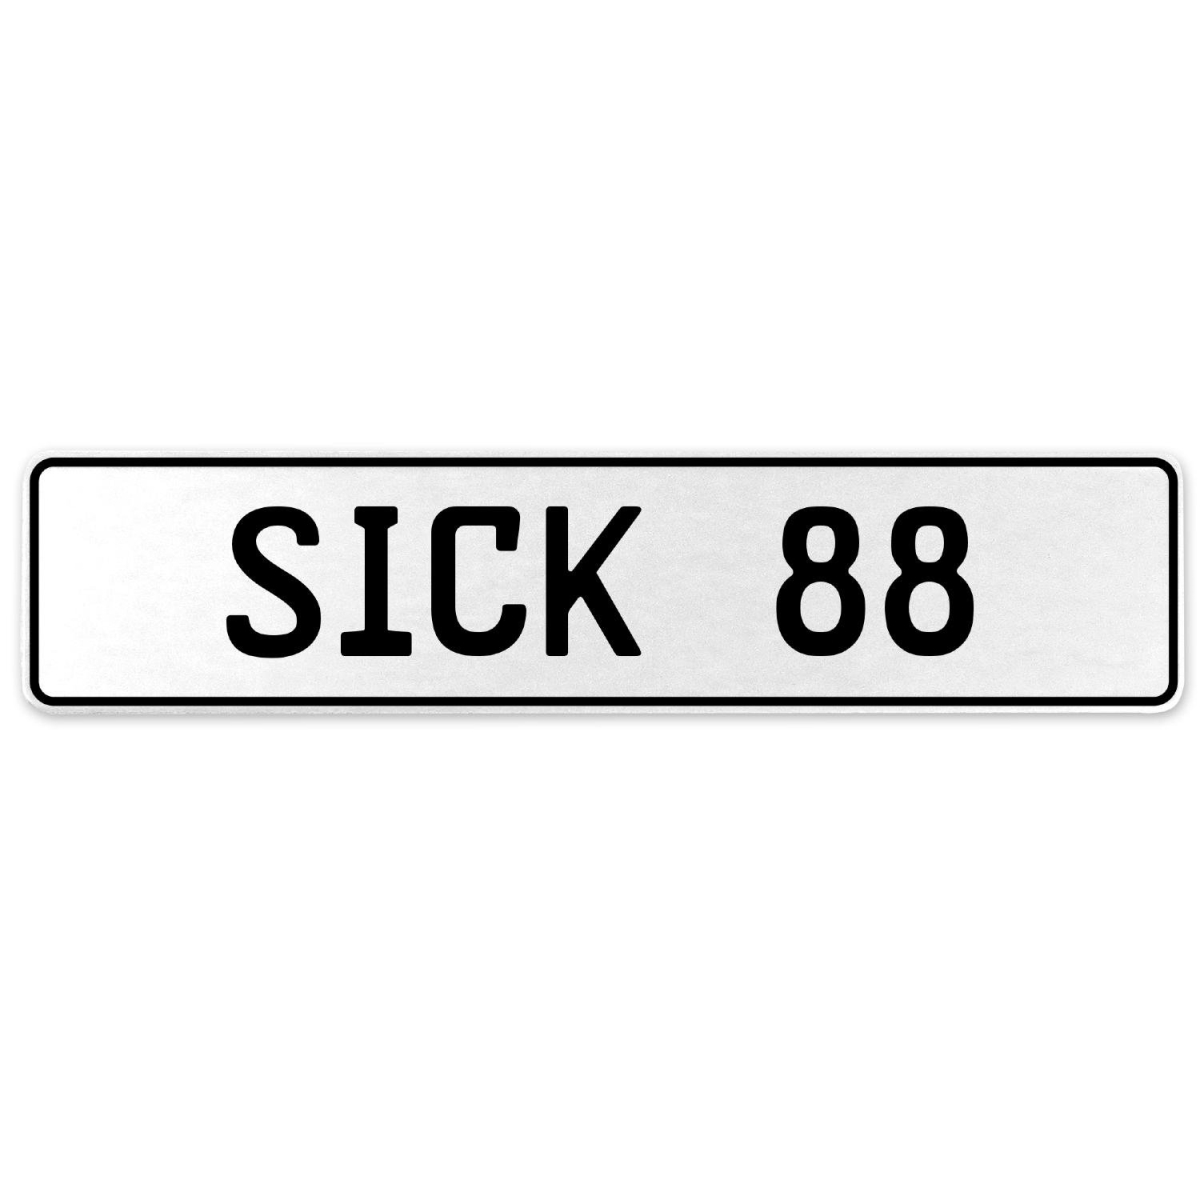 554388 Sick 88 - White Aluminum Street Sign Mancave Euro Plate Name Door Sign Wall